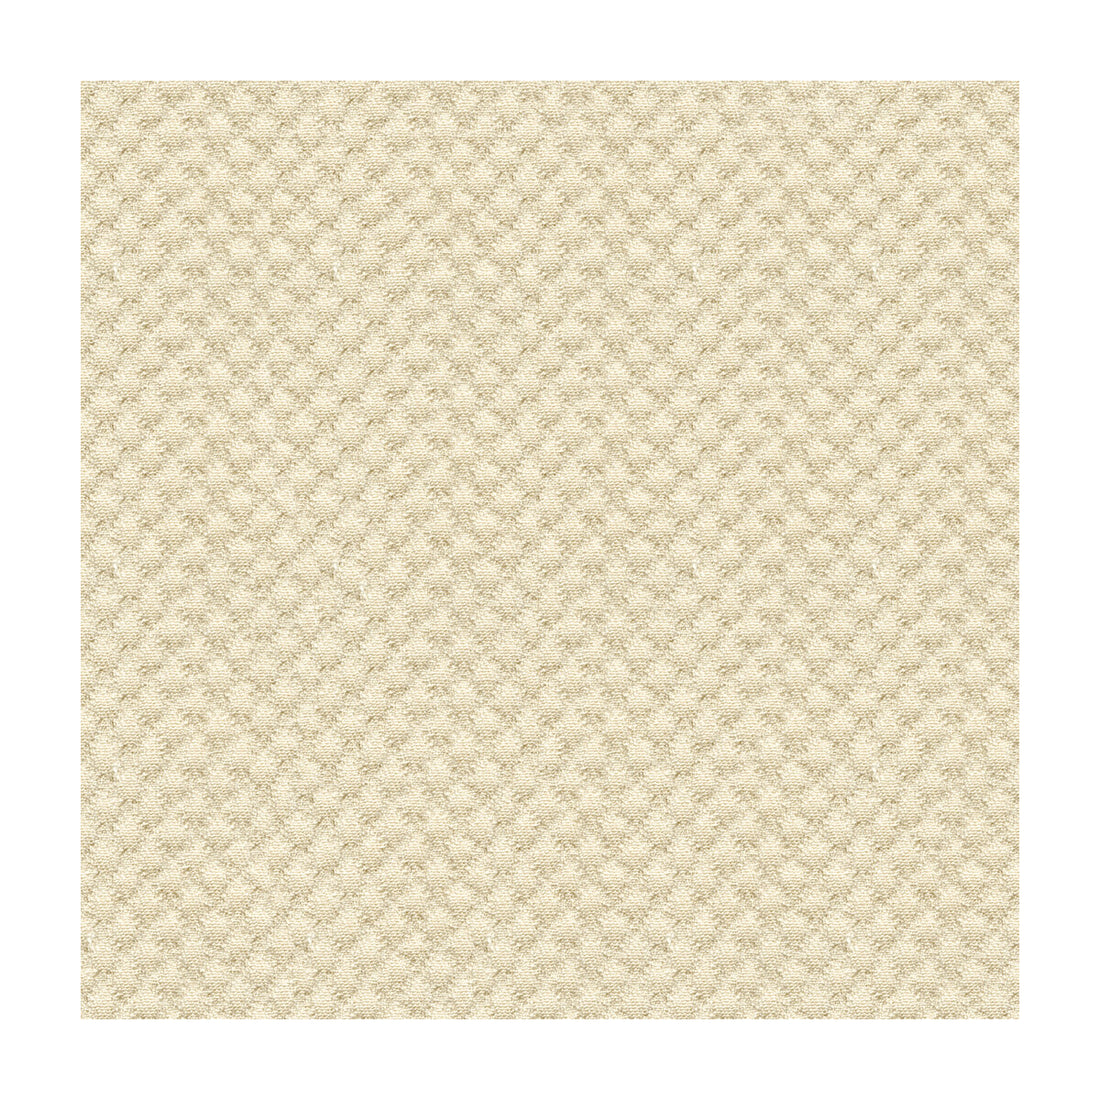 Kravet Design fabric in 25807-1116 color - pattern 25807.1116.0 - by Kravet Design in the Sunbrella collection